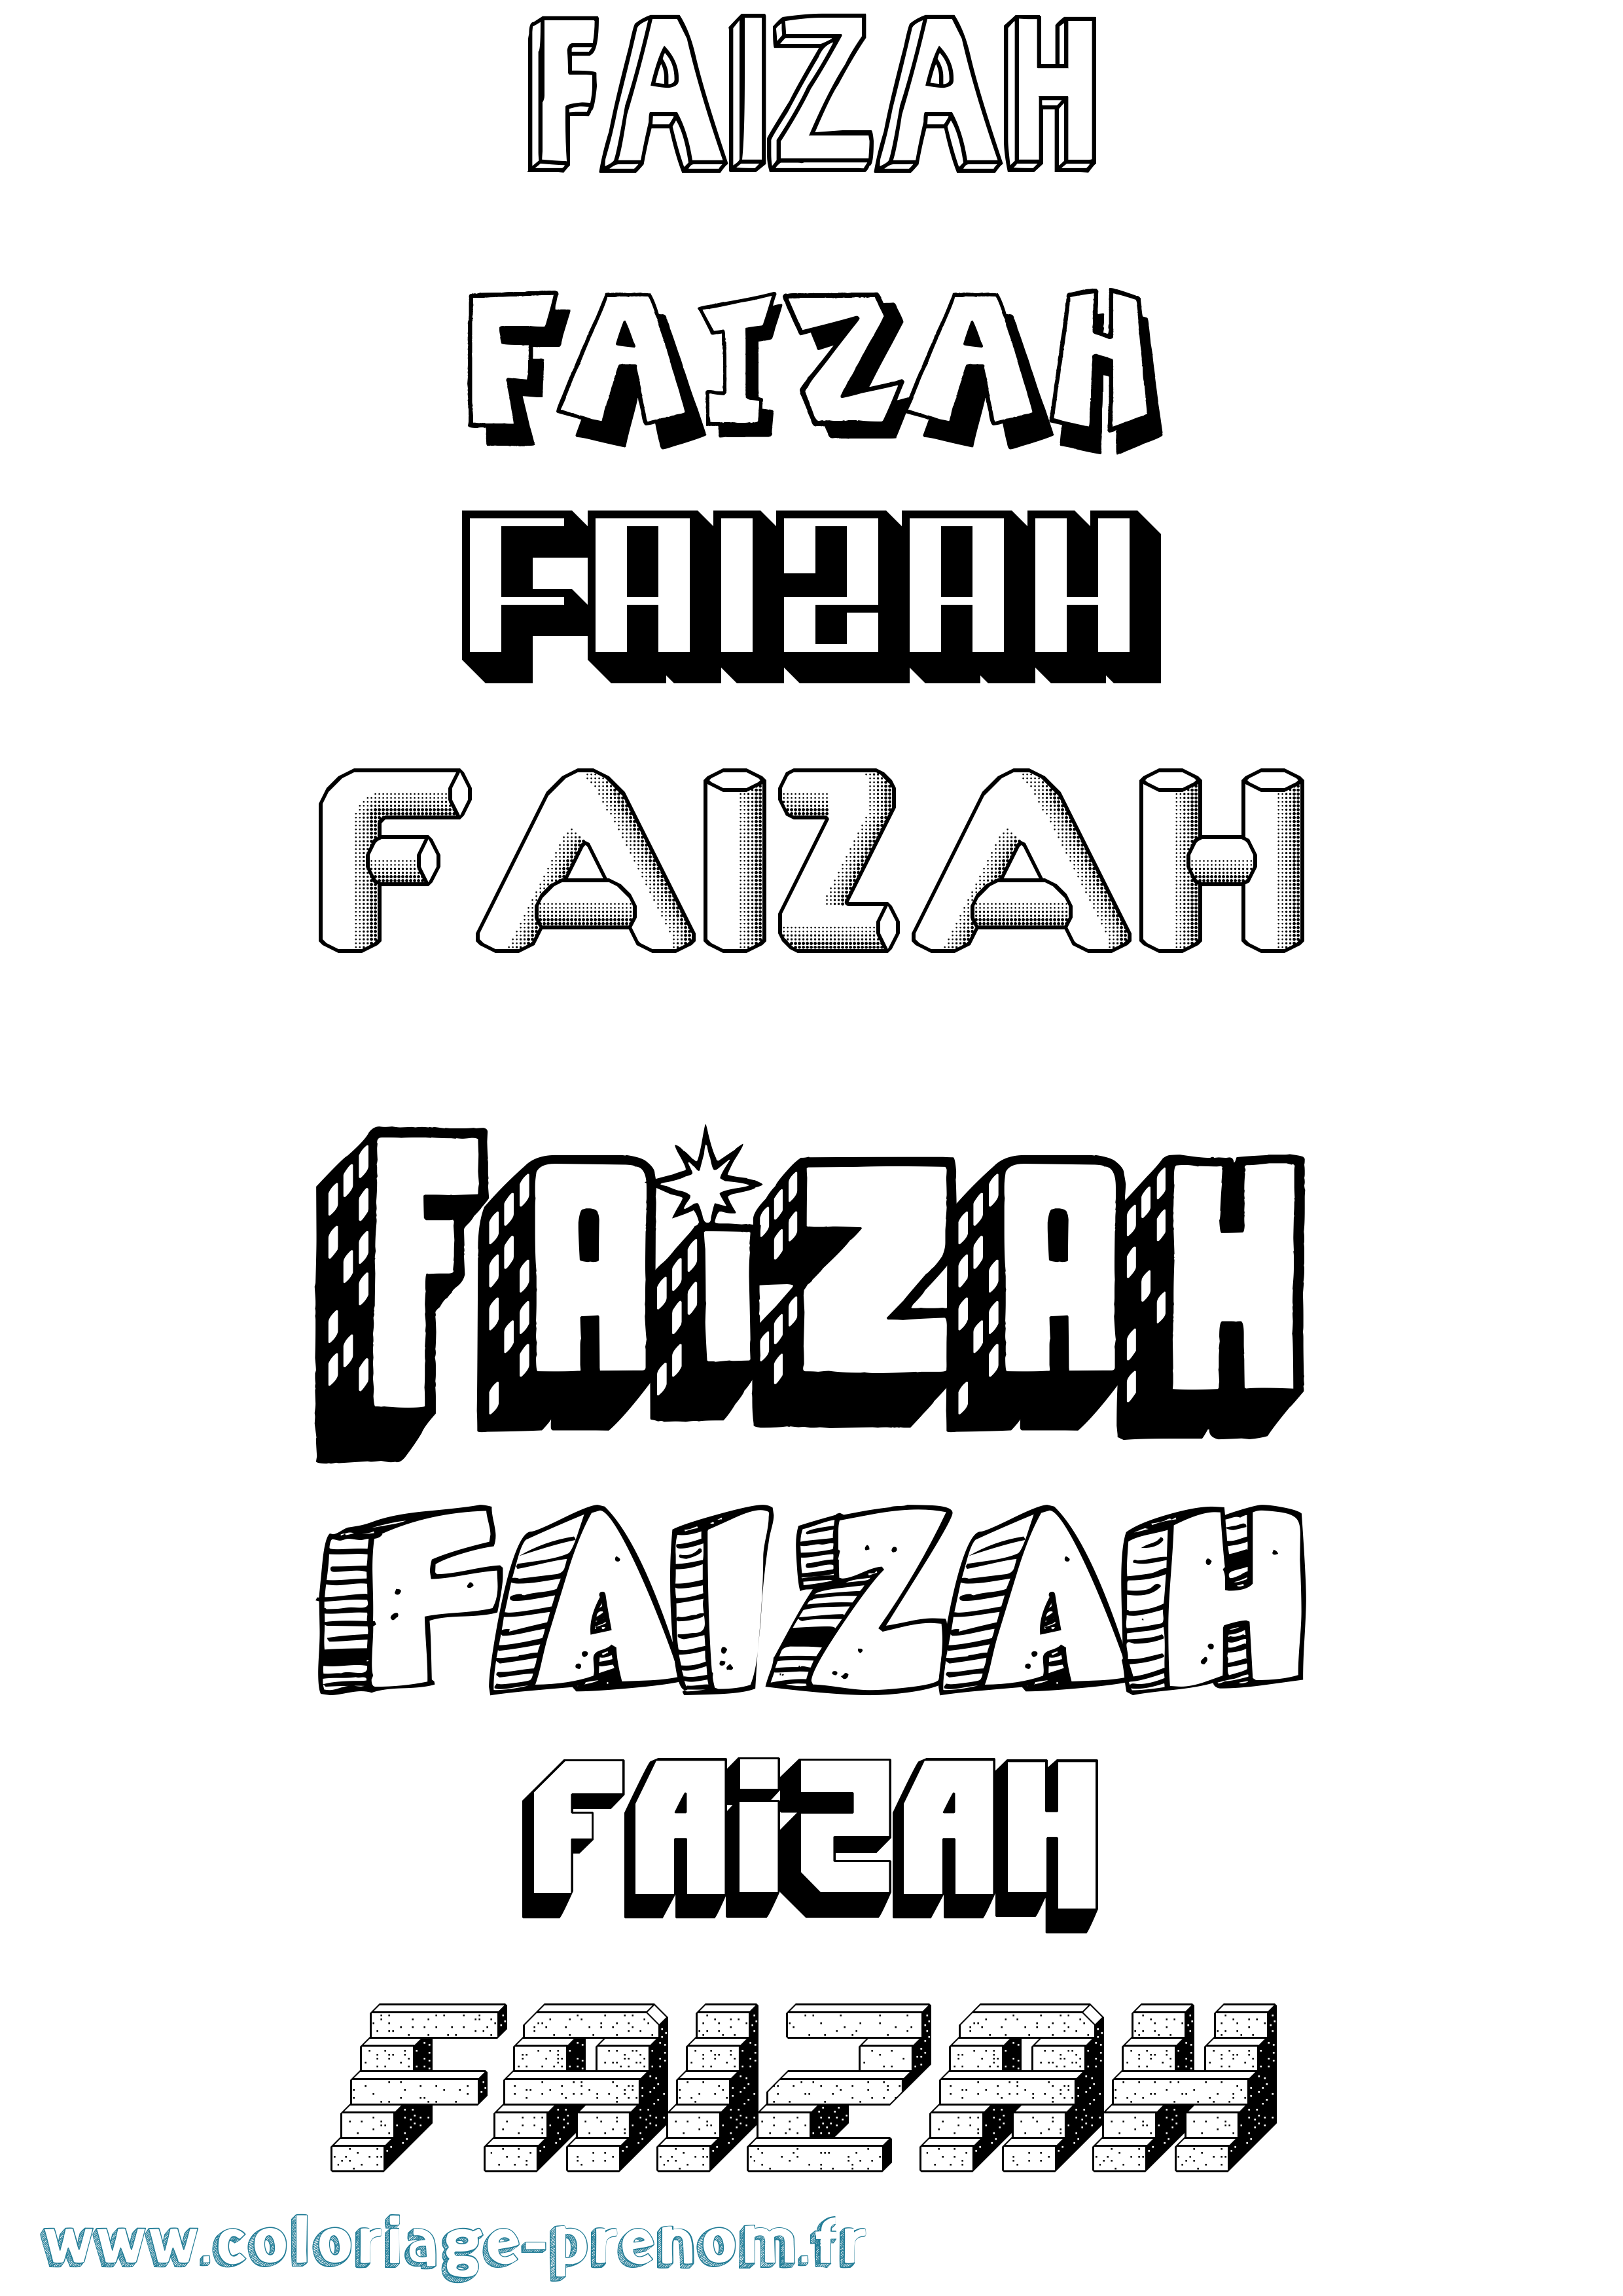 Coloriage prénom Faizah Effet 3D